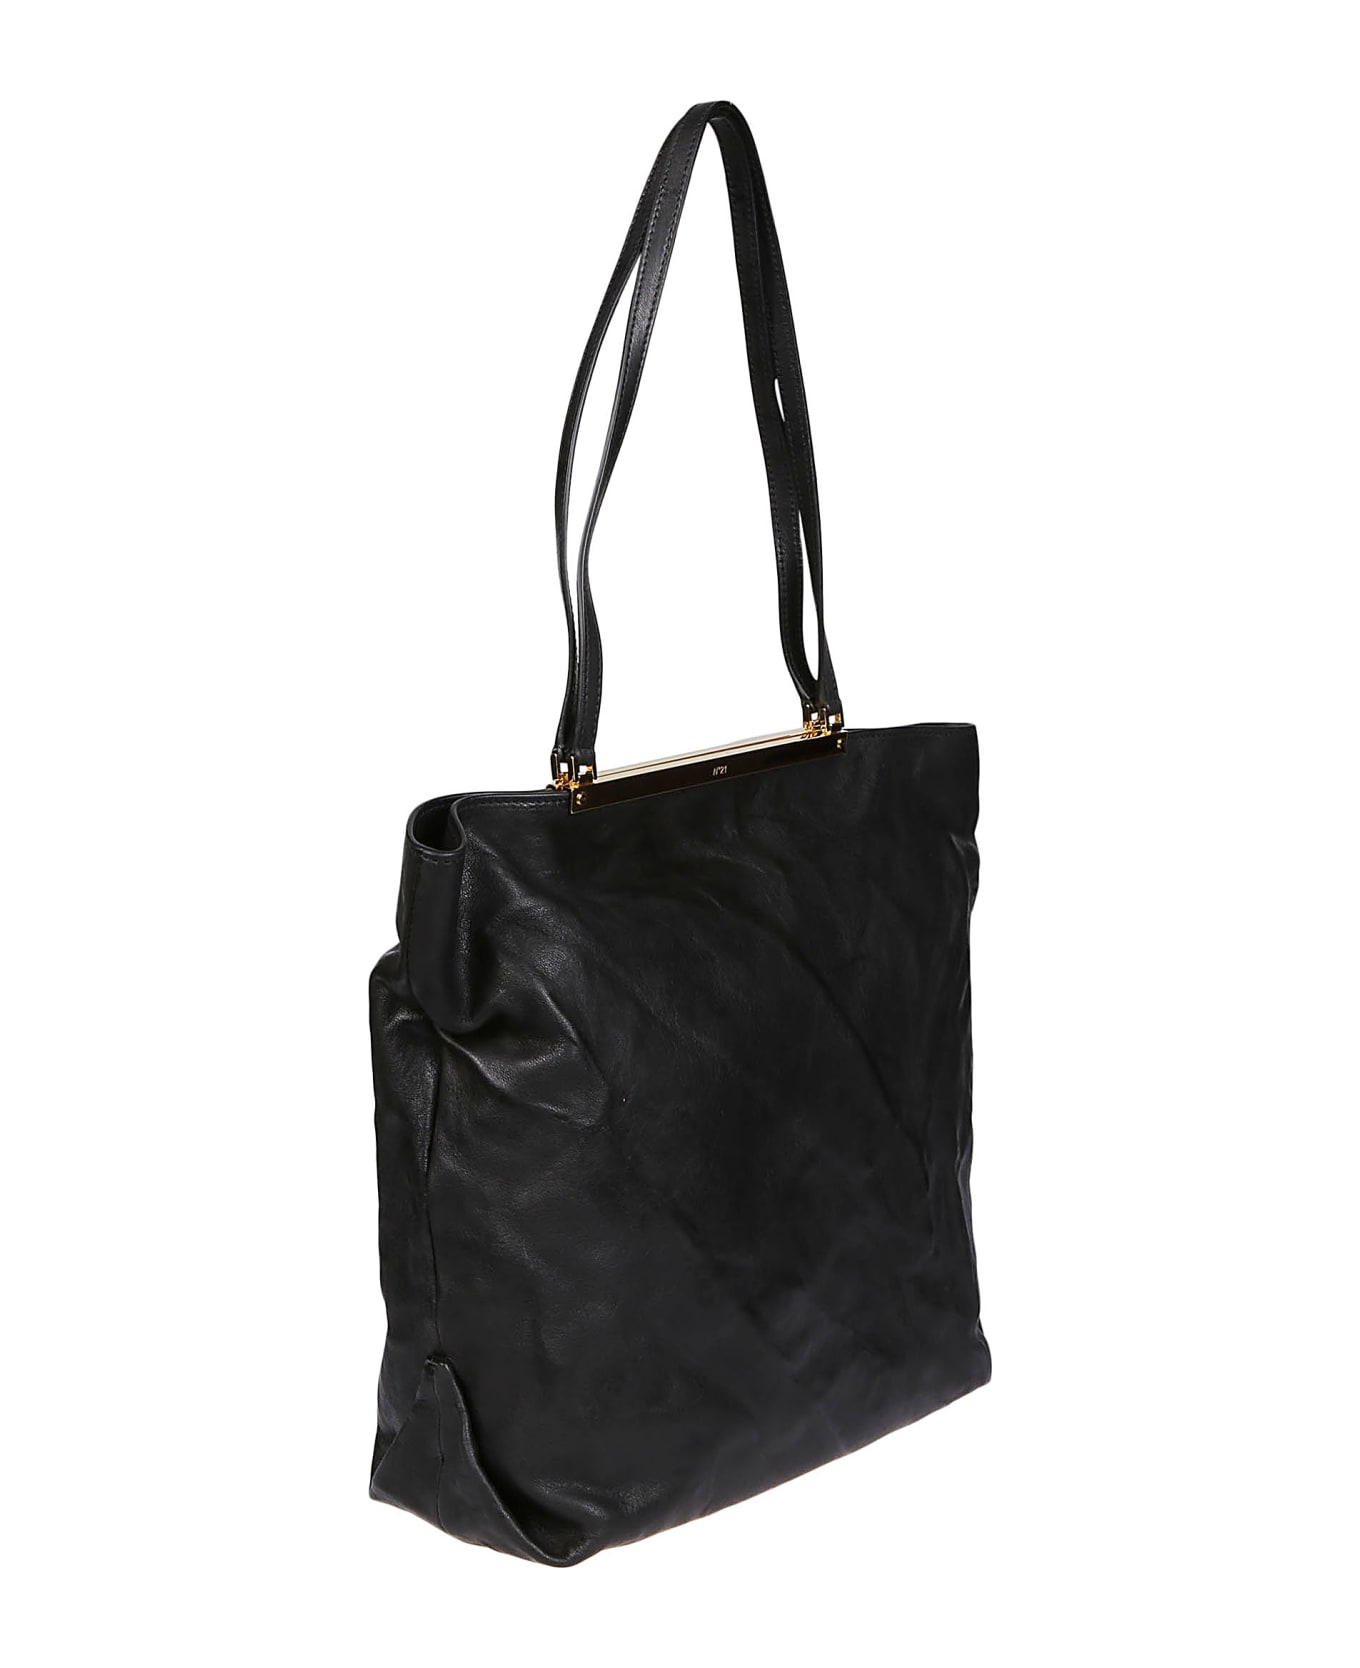 N.21 Barrette Stropicciata Shopping Bag - Black